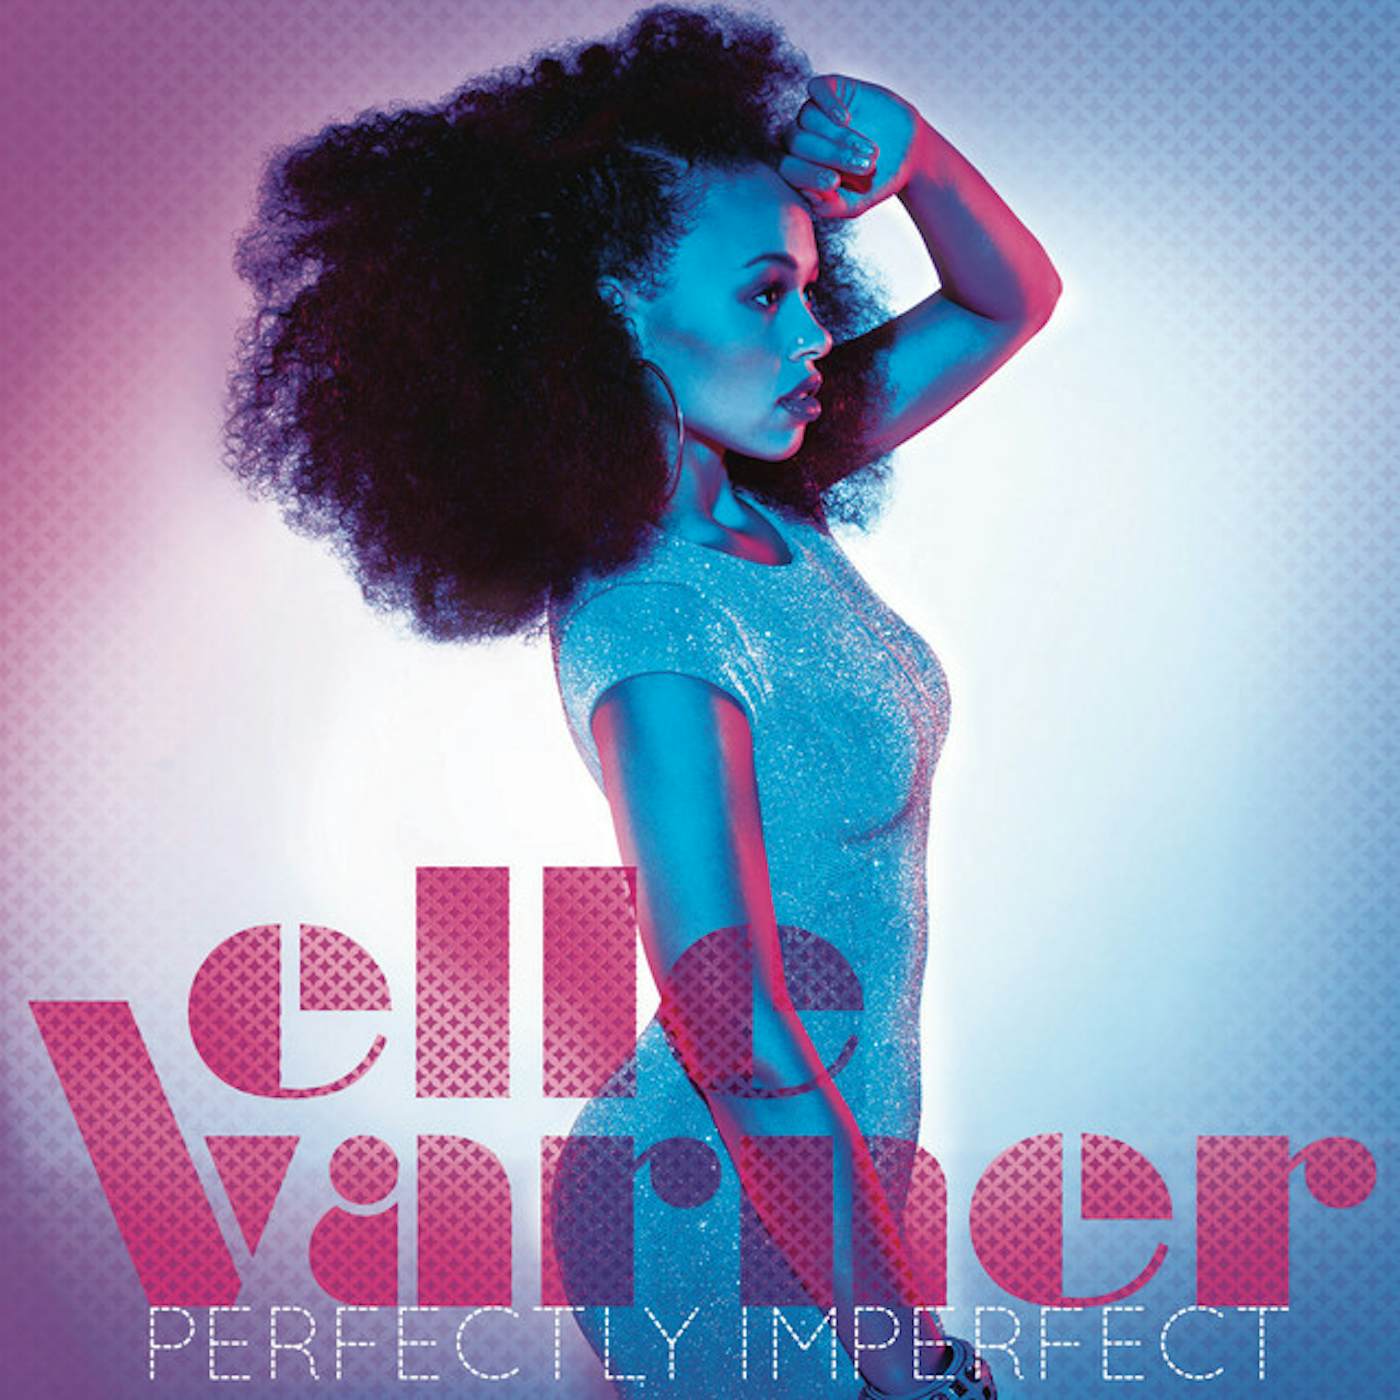 Elle Varner PERFECTLY IMPERFECT CD